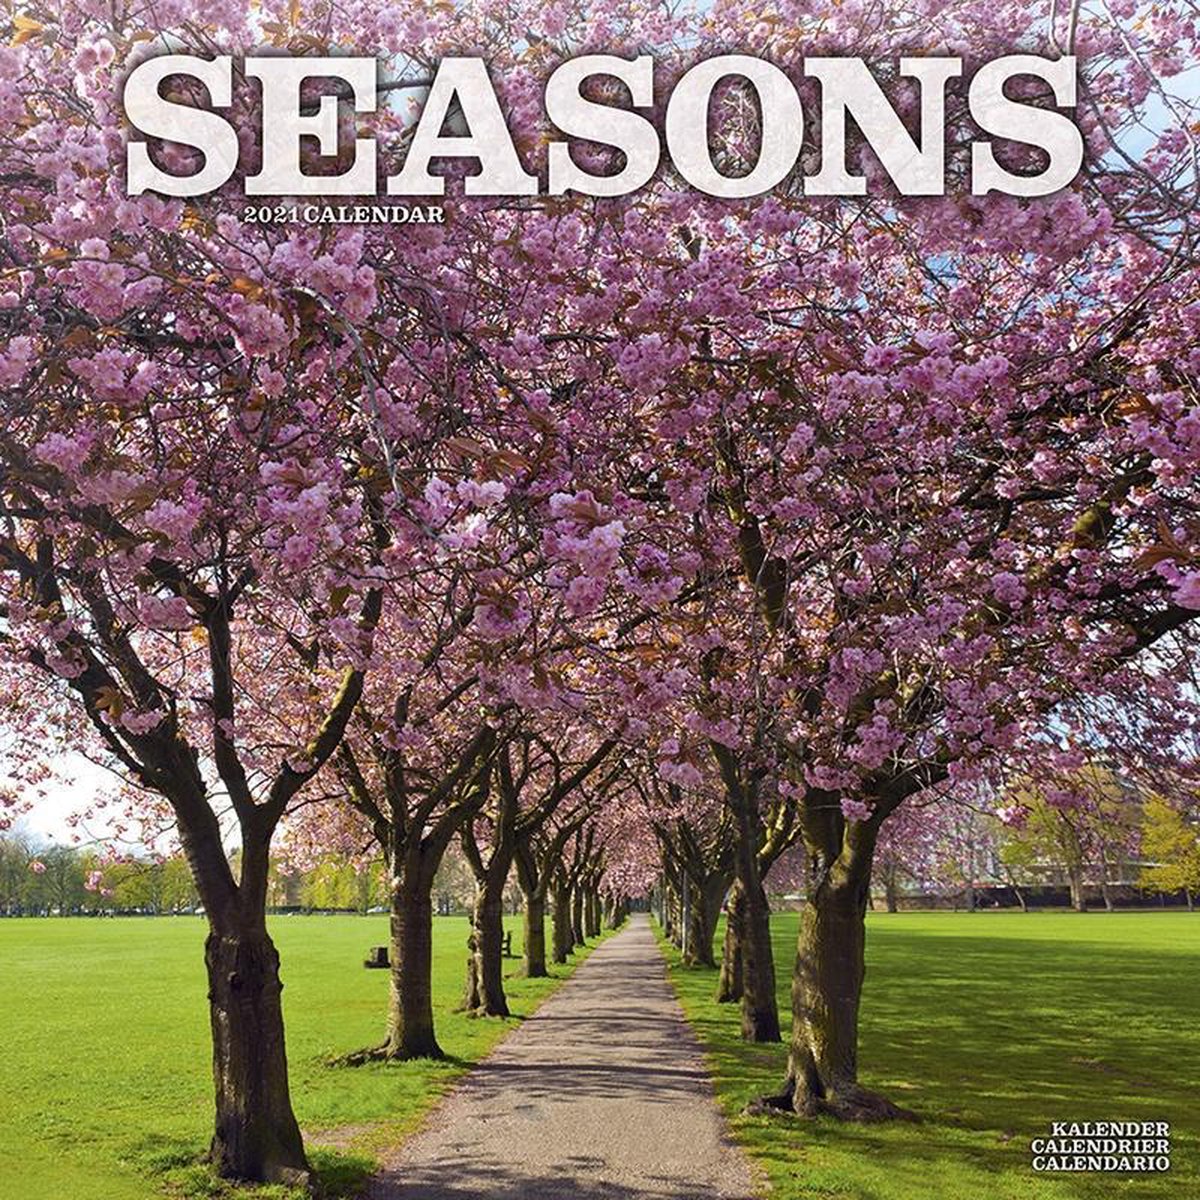 Seasons - Jahreszeiten 2021